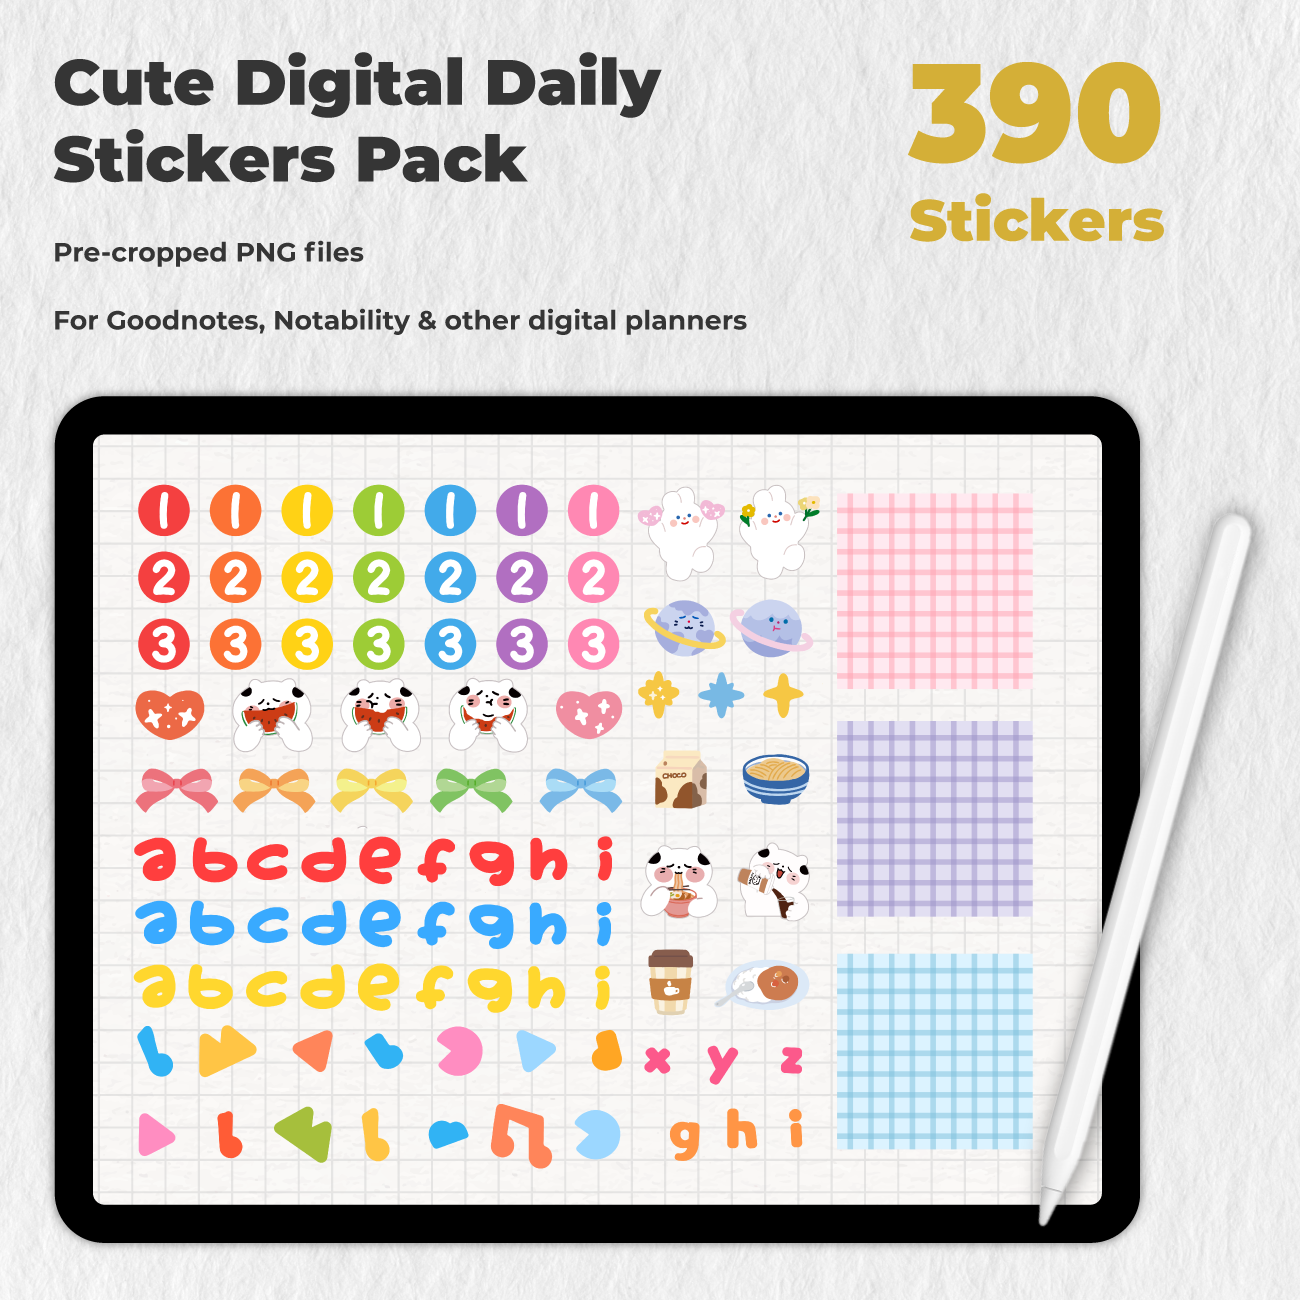 390 Cute Digital Daily Stickers Pack